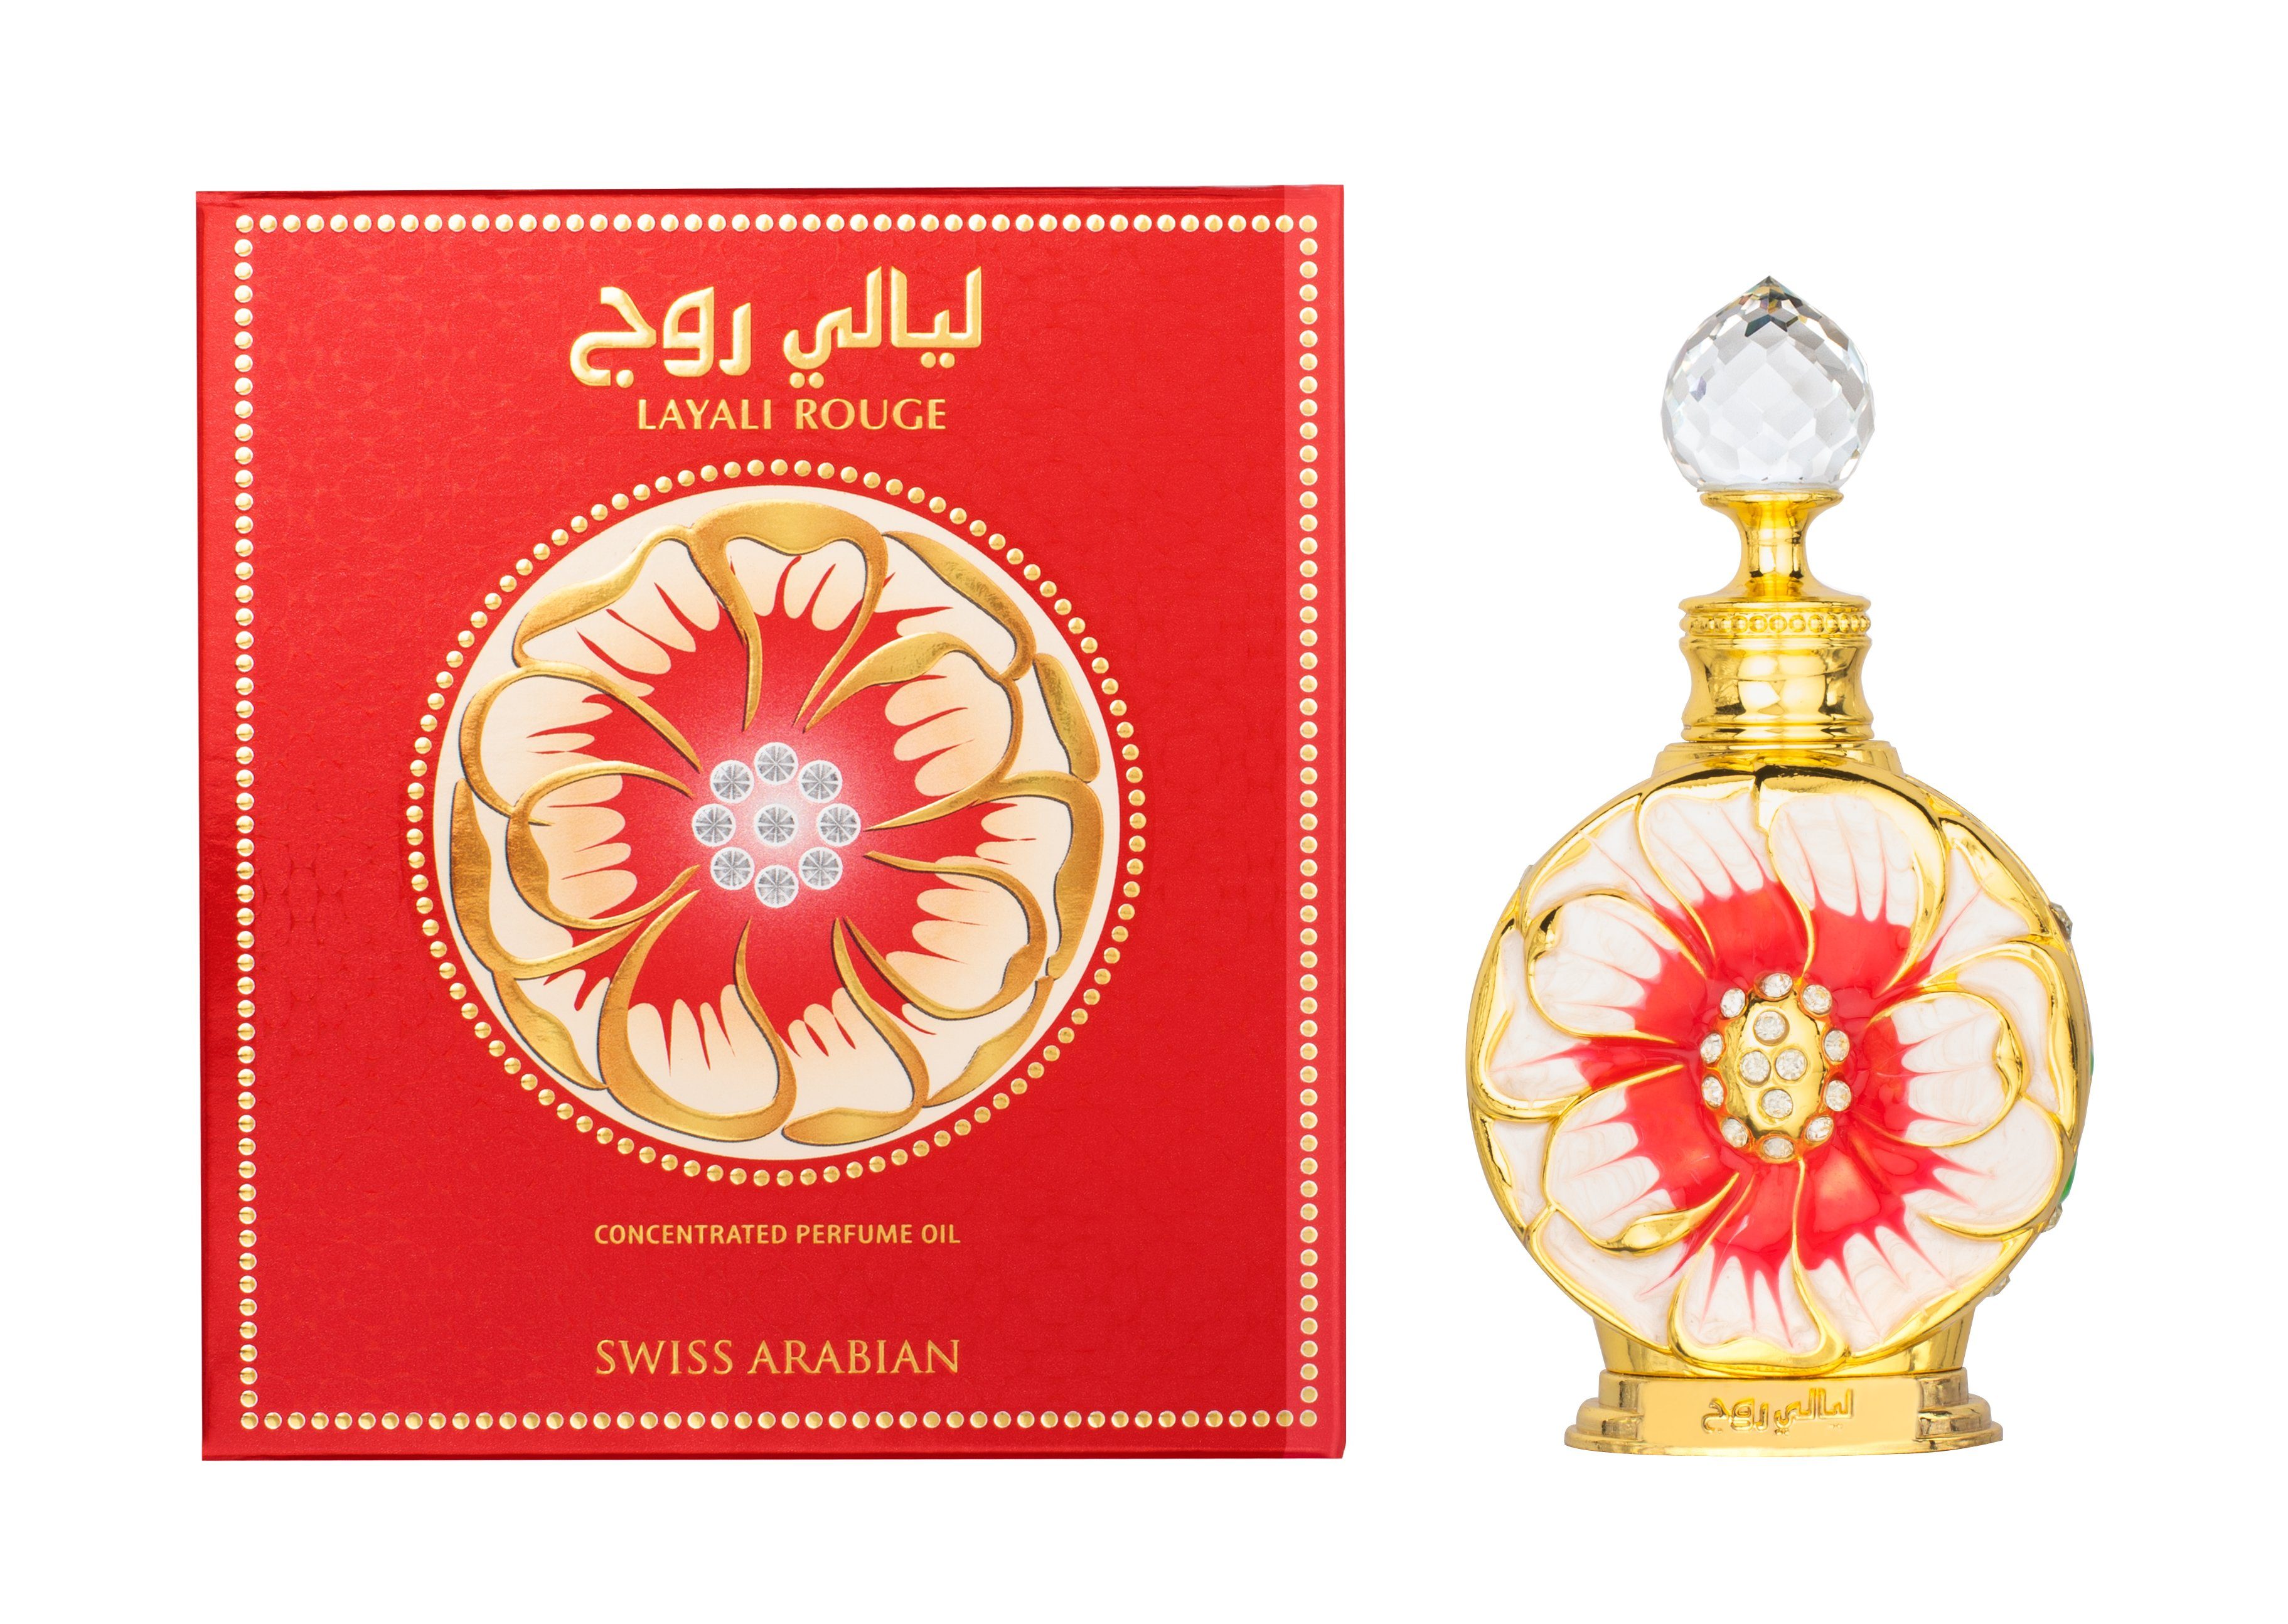 Swiss Arabian Öl-Parfüm Swiss Arabian konzentriertes Parfüm Öl Layali Rouge 15ml Unisex